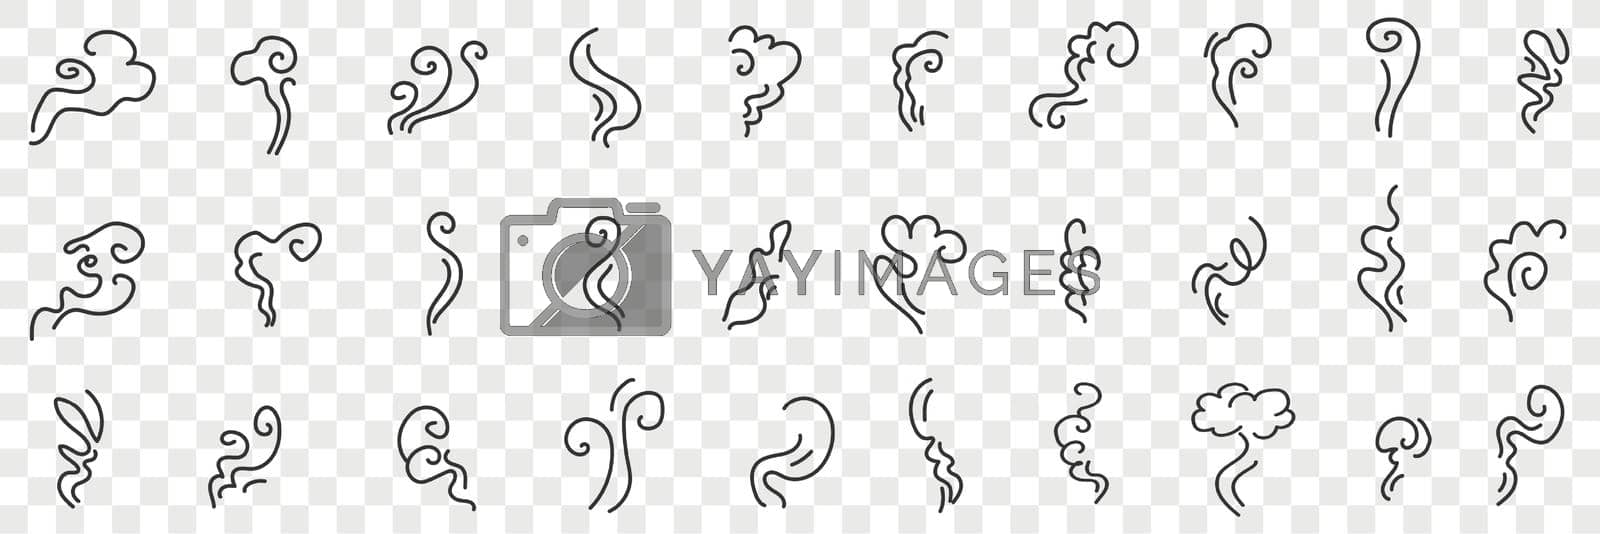 Royalty free image of Wind and curves doodle set by Vasilyeva